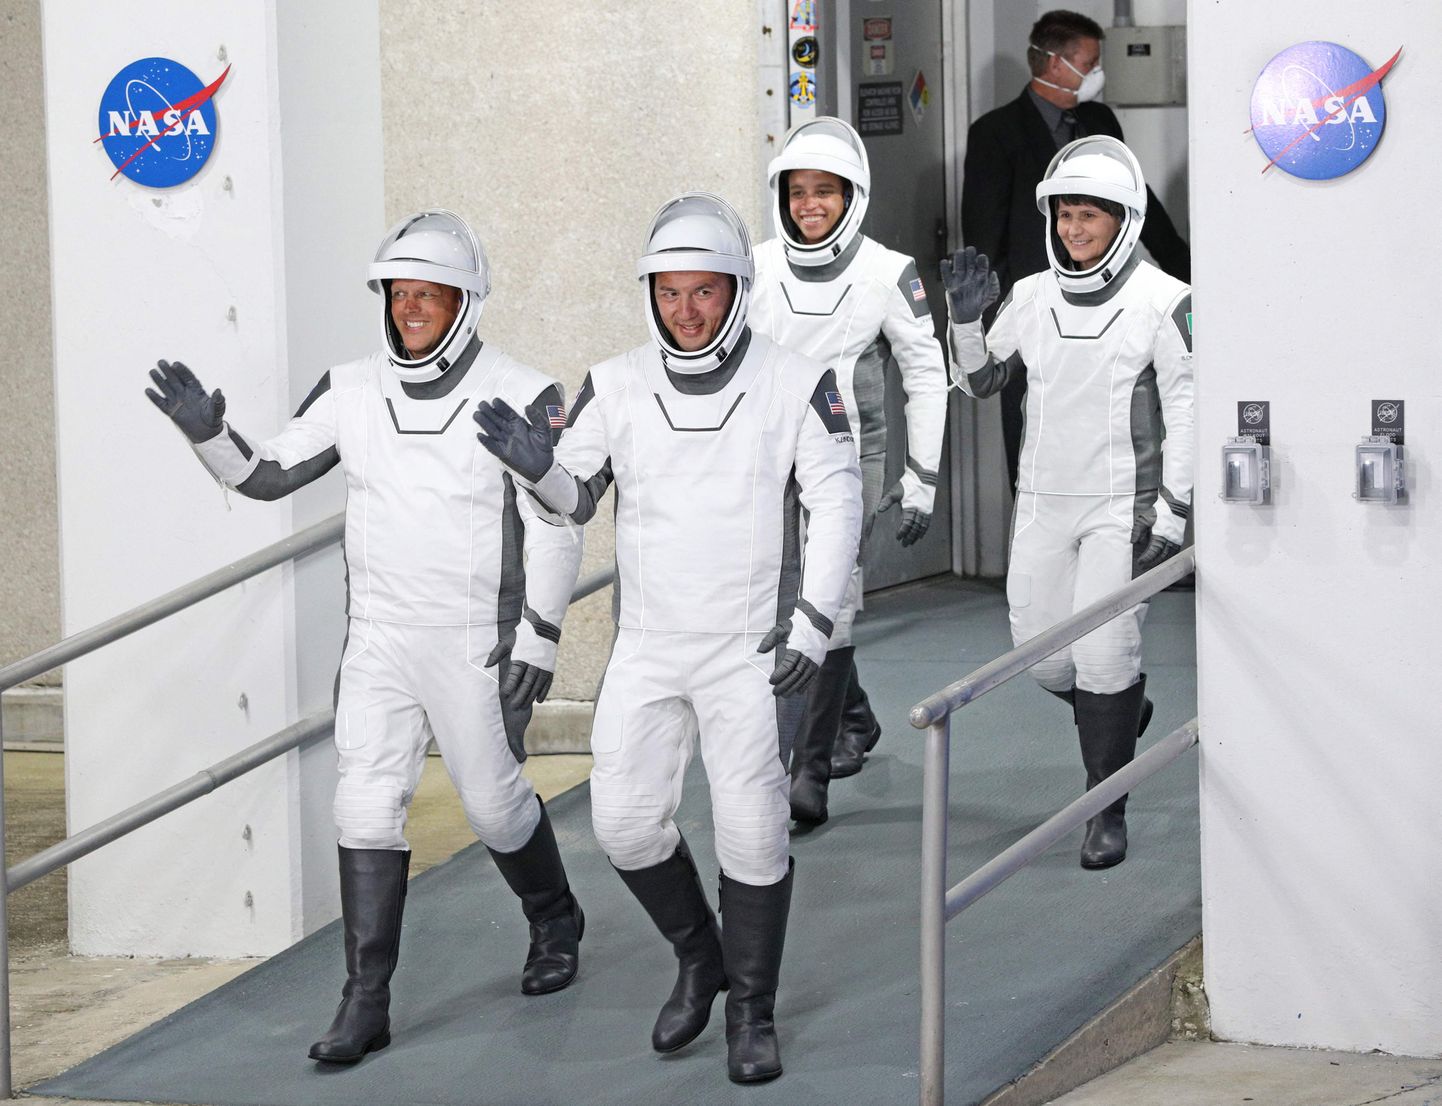 Crew-4 astronaudid vasakult: Bob Hines, Kjell Lindgren, Jessica Watkins ja Samantha Cristoforetti.